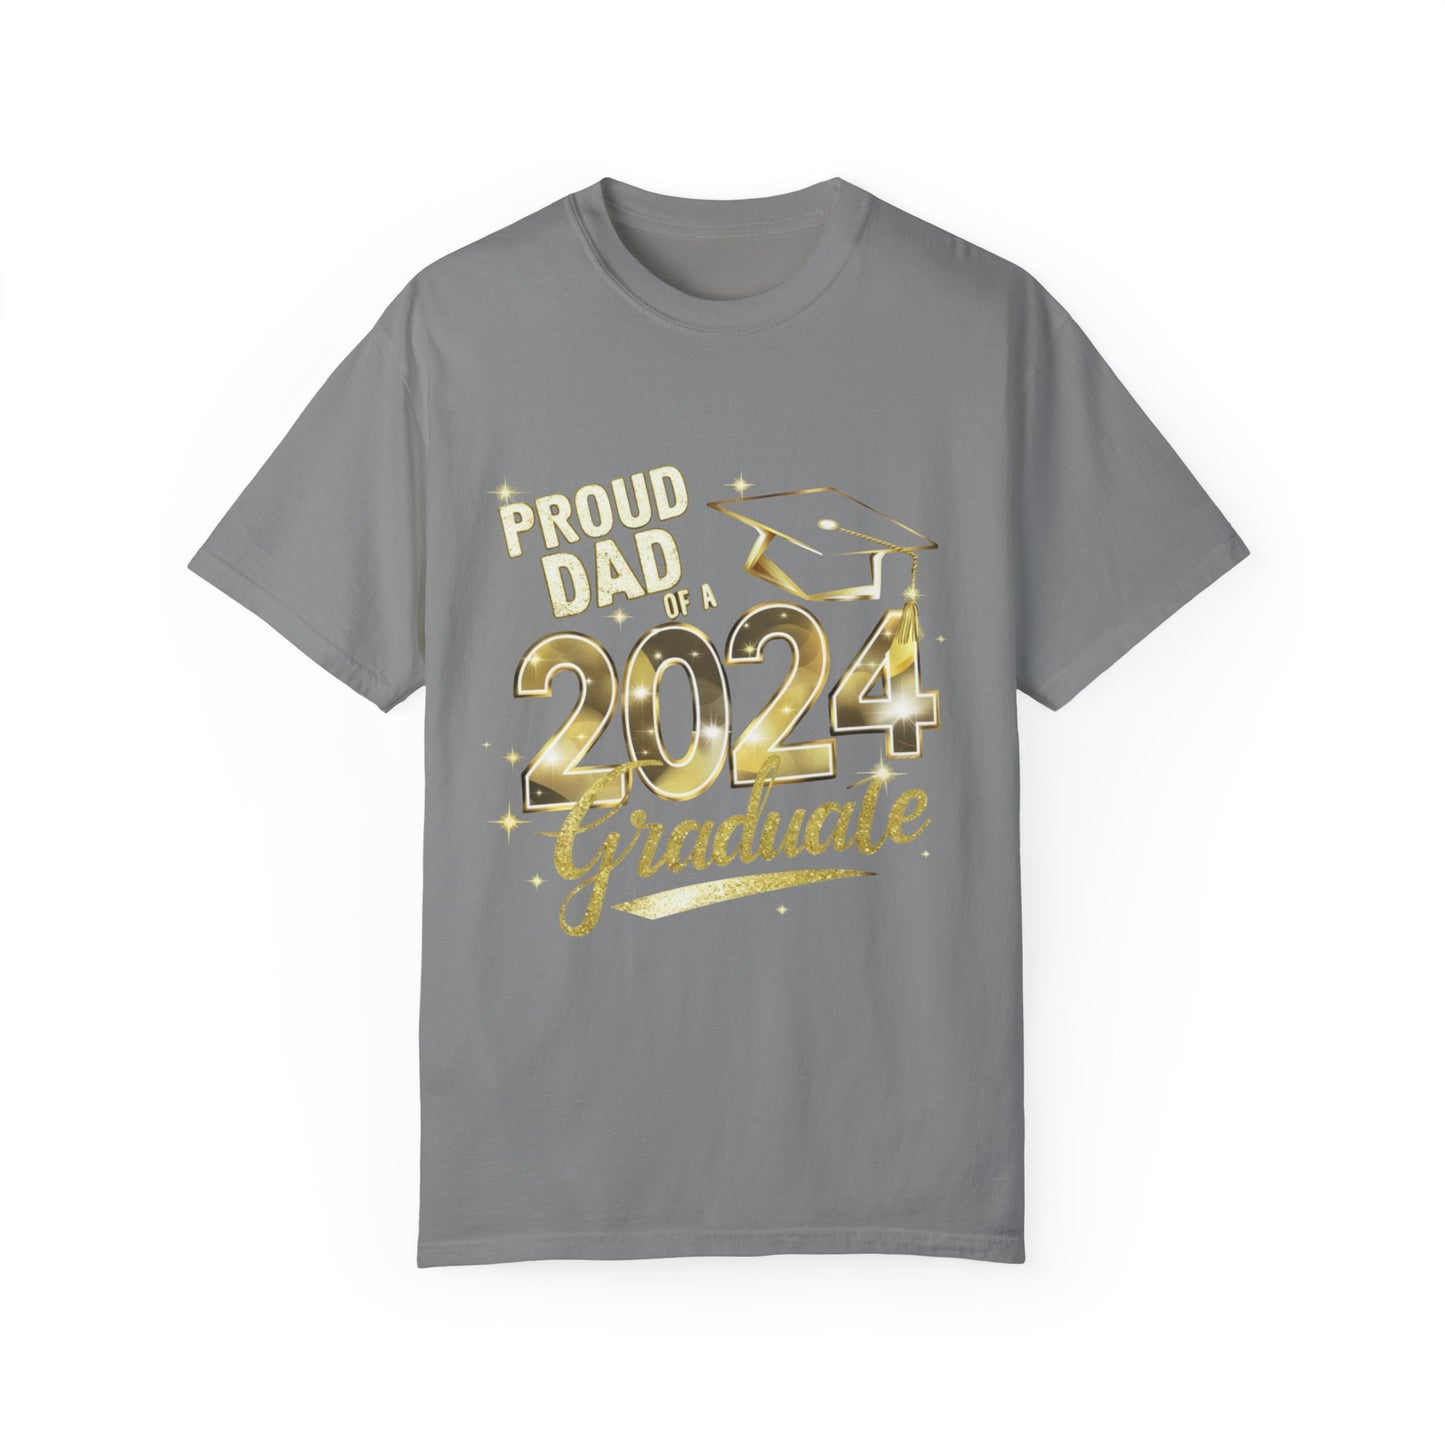 Proud of Dad 2024 Graduate Unisex Garment-dyed T-shirt Cotton Funny Humorous Graphic Soft Premium Unisex Men Women Granite T-shirt Birthday Gift-4